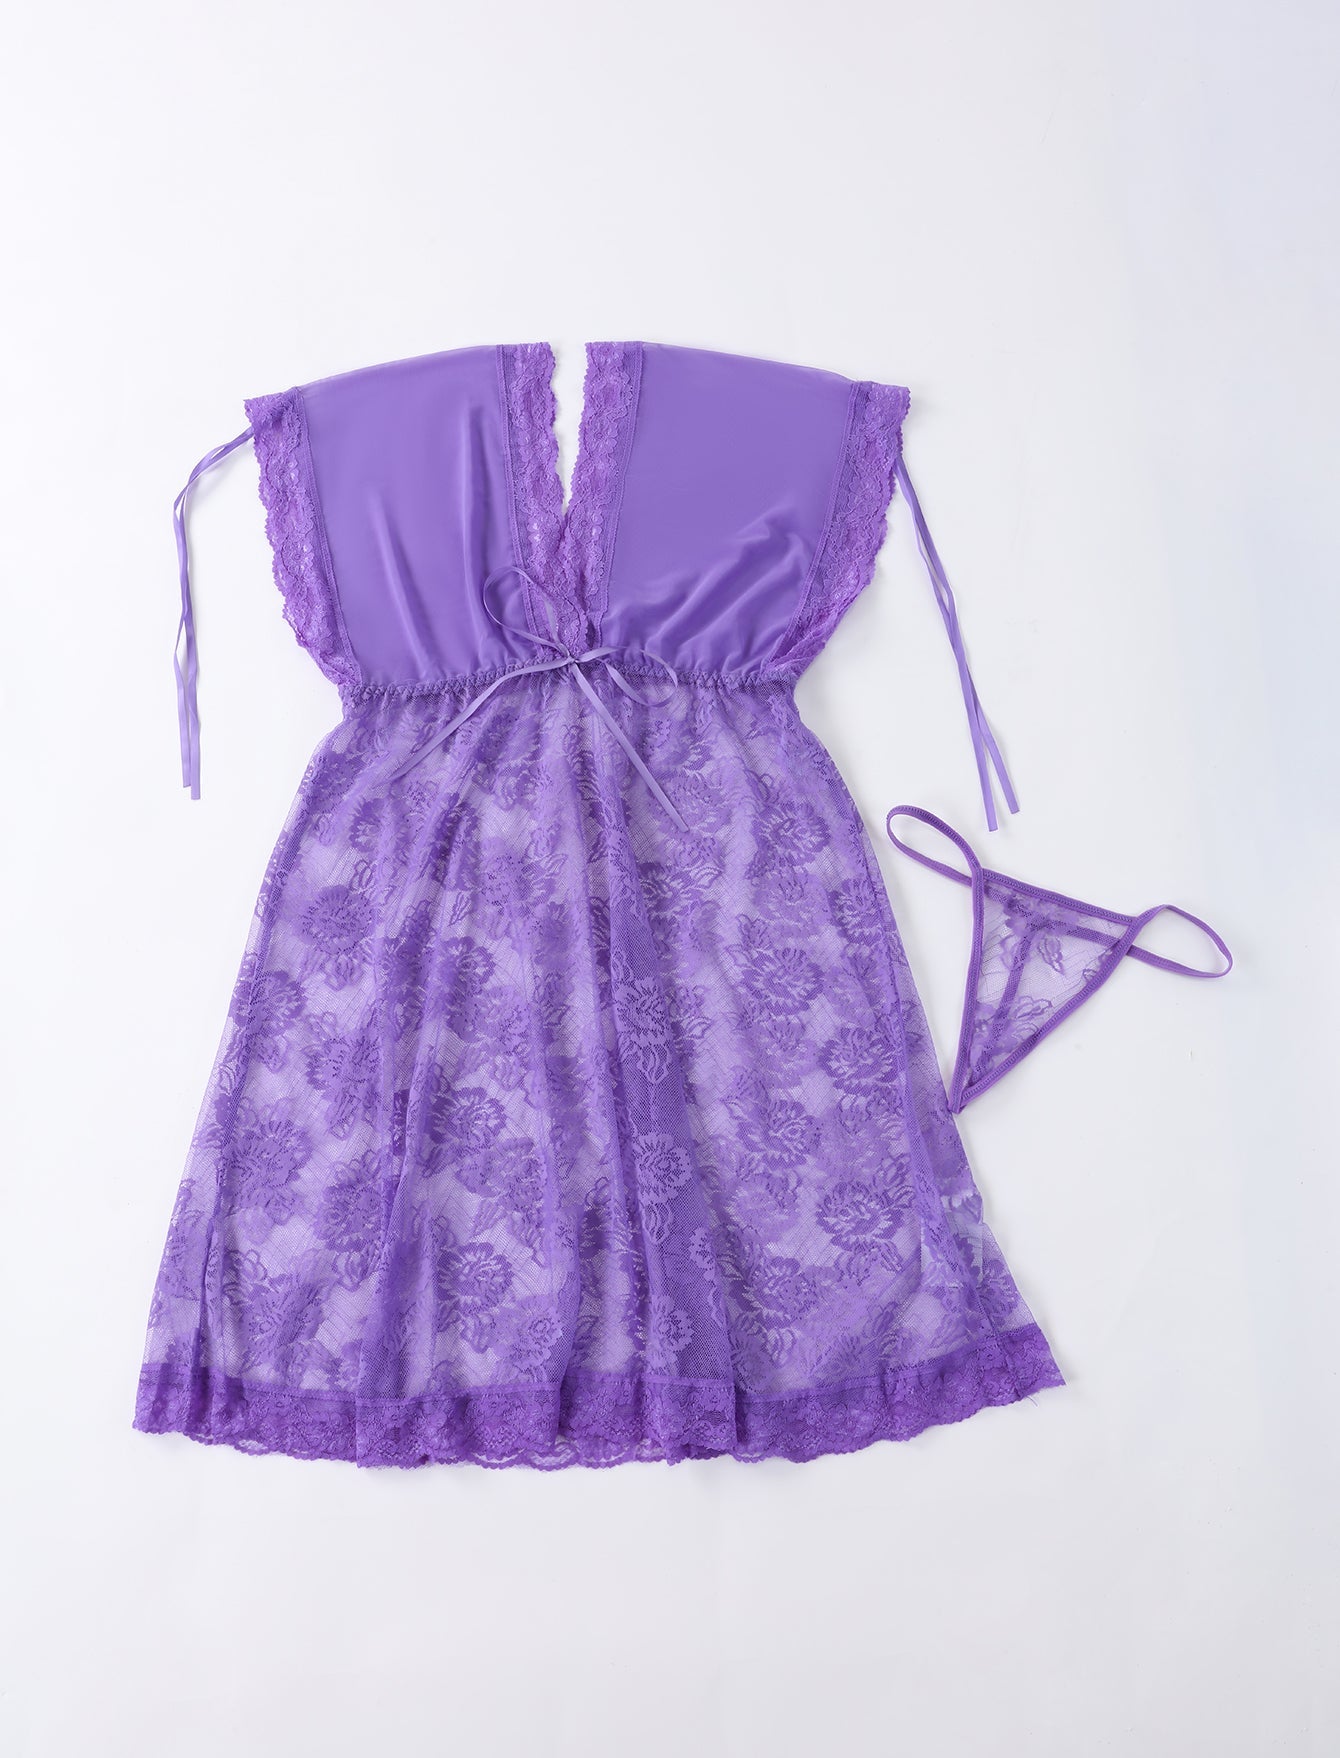 Women Perspective Lace Lingerie Women Robe Dress Babydoll Nightdress Nightgown Sleepwear With G-String Sai Feel